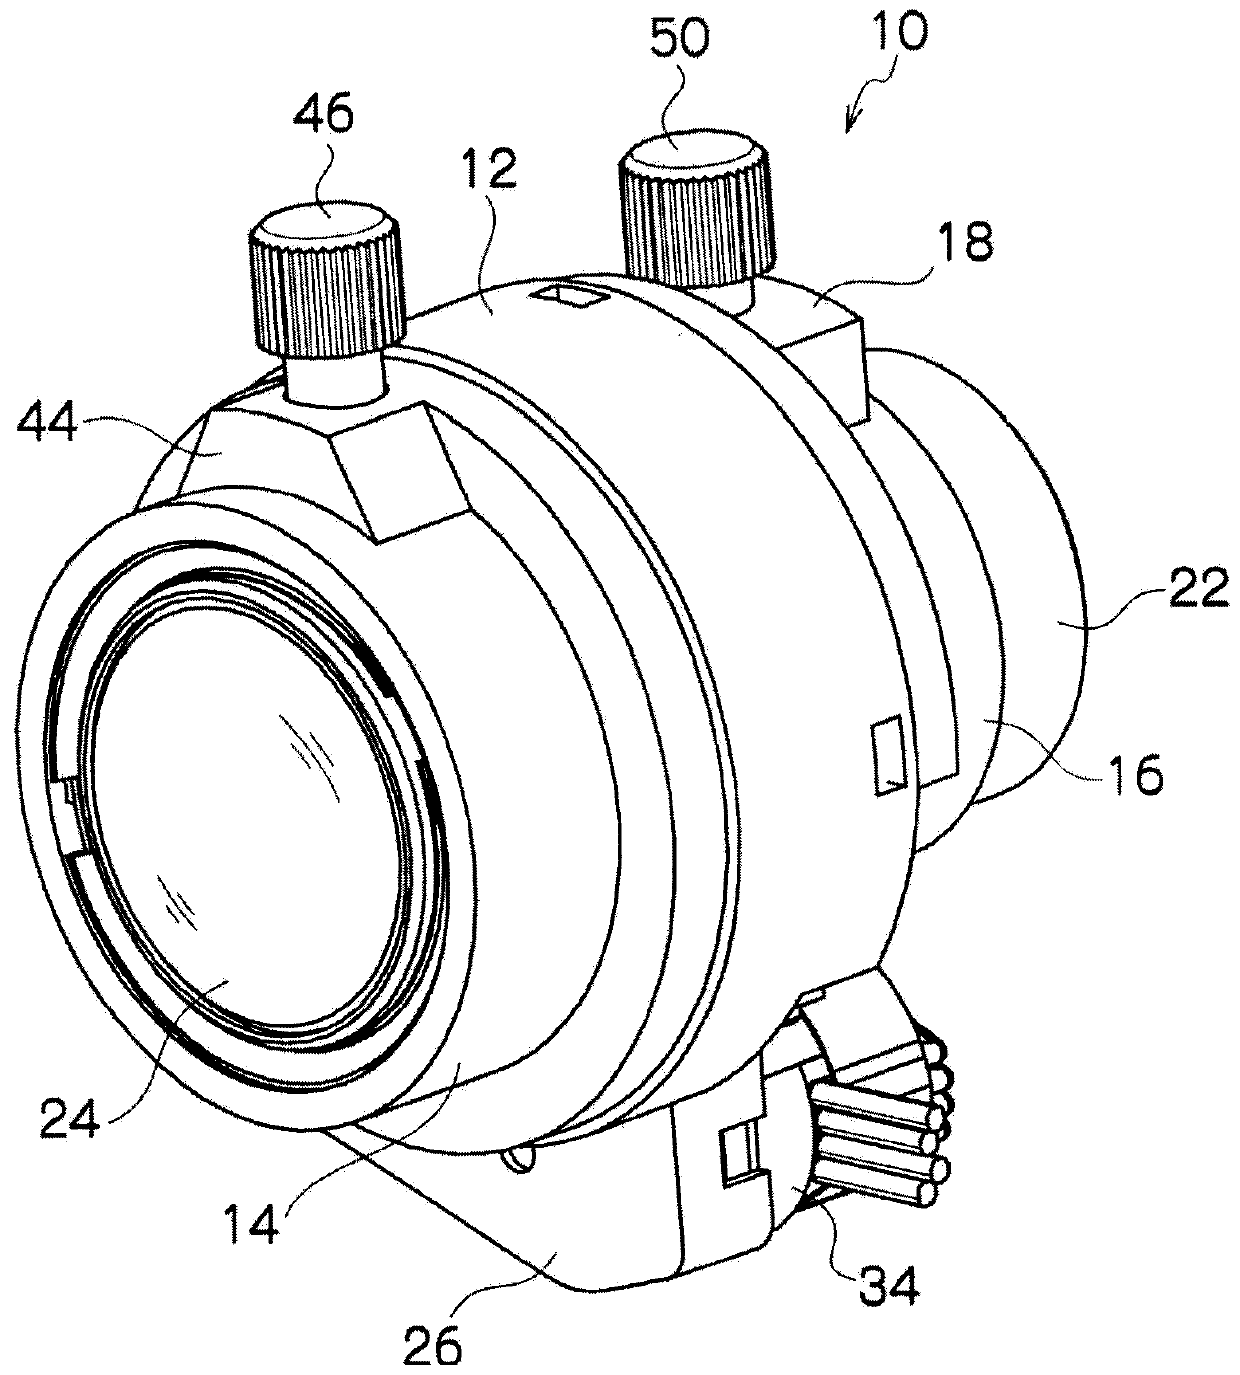 Lens device for surveillance camera